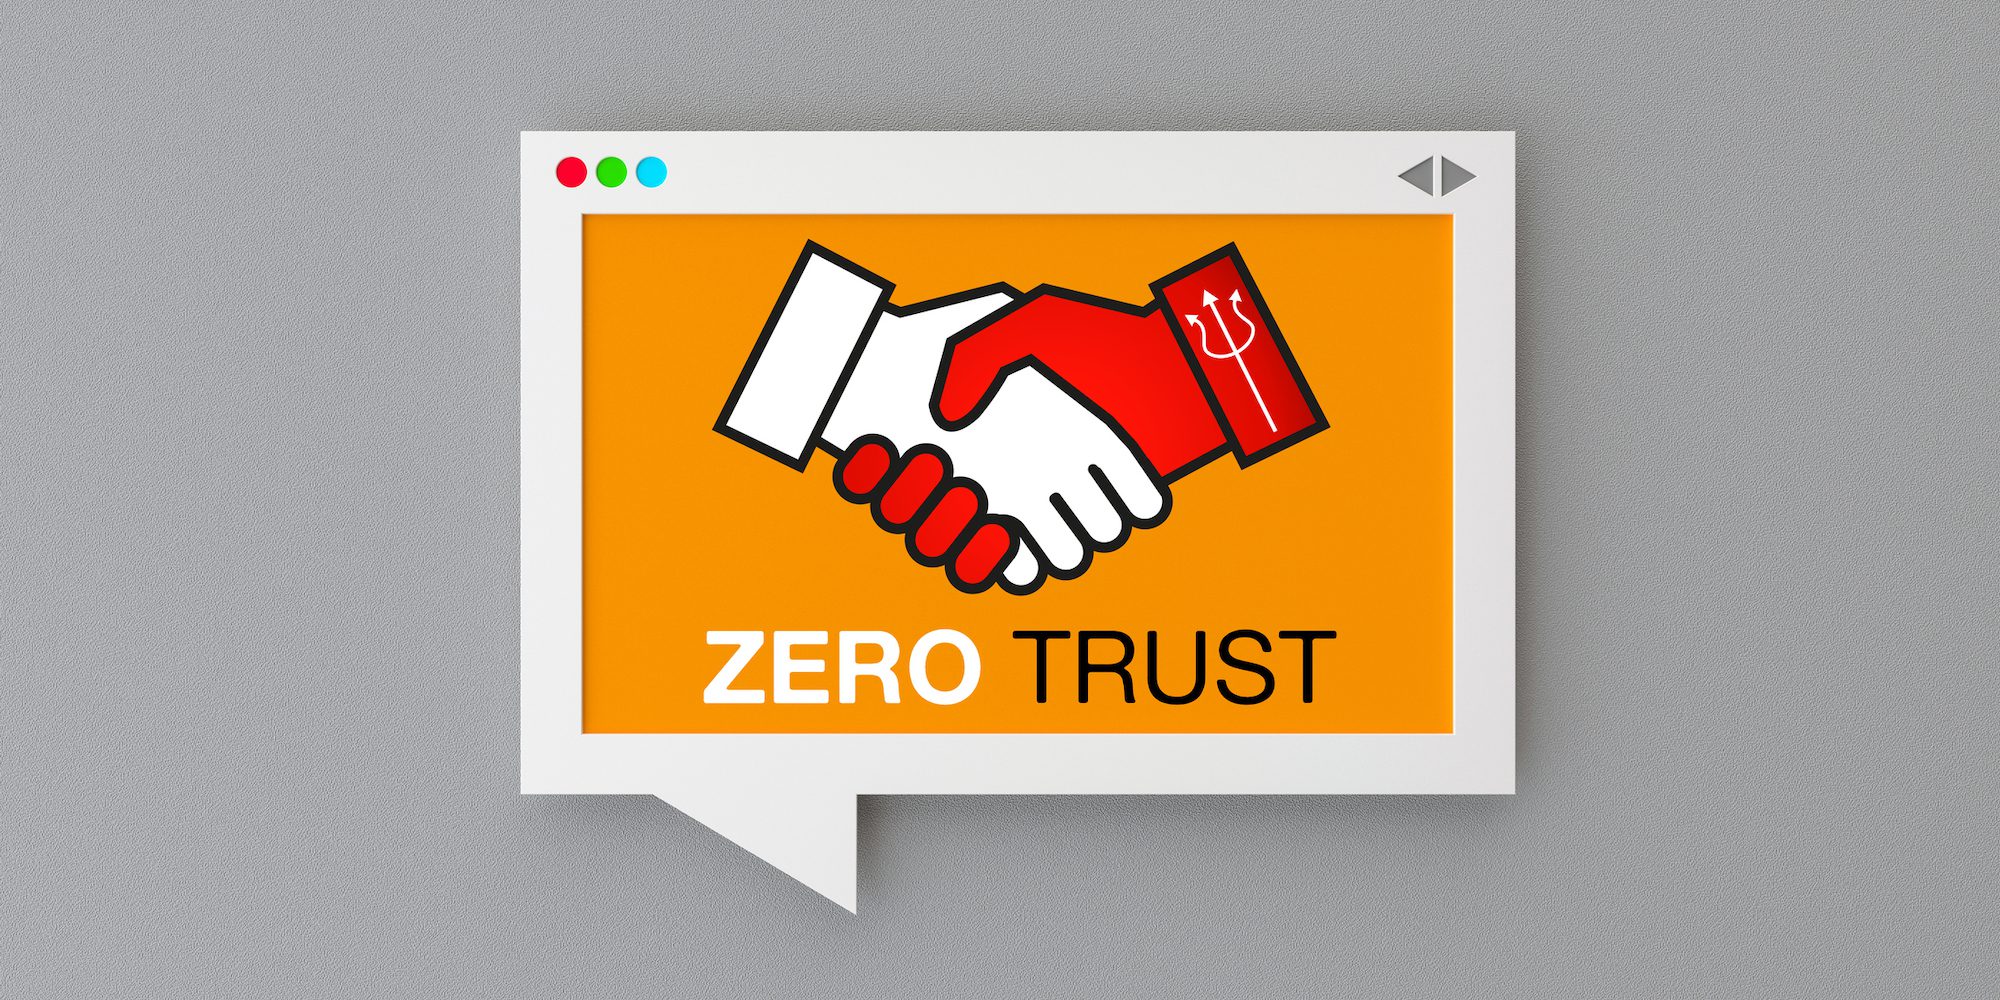 Access management must get stronger in a zero-trust world